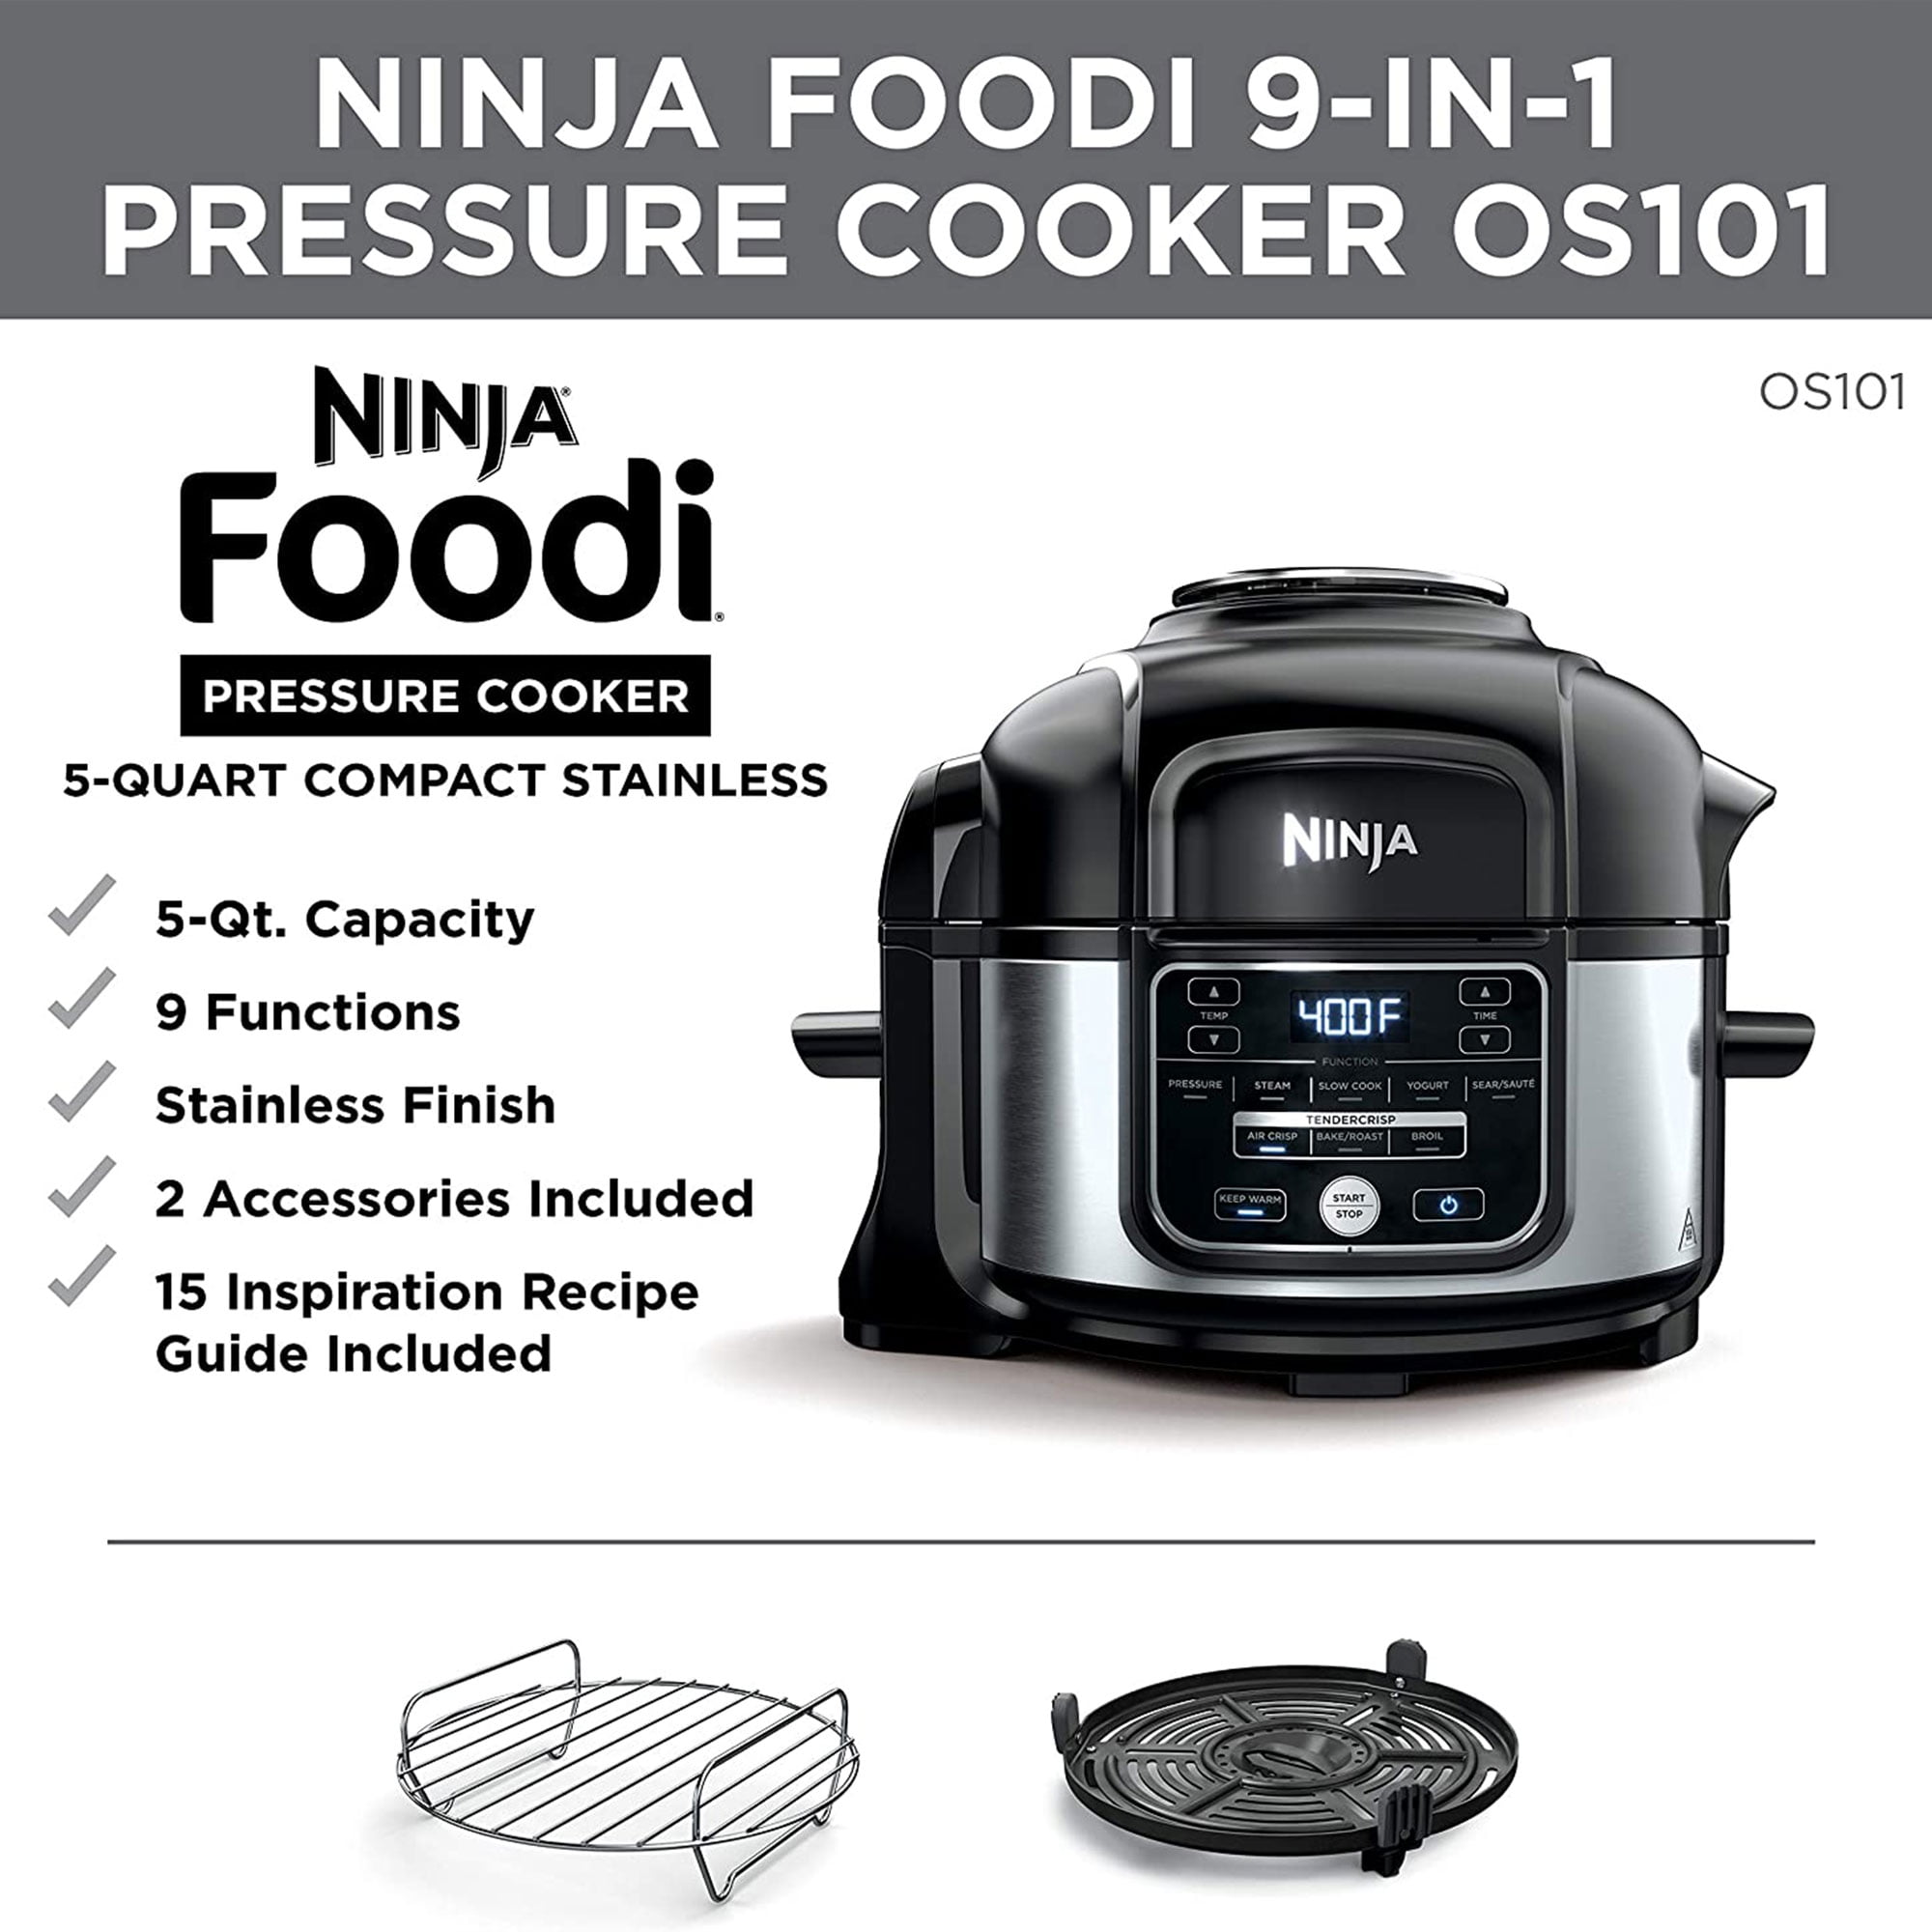 Ninja Combi Multicooker, Oven, & Air Fryer from $159.98 Shipped (Reg. $229)